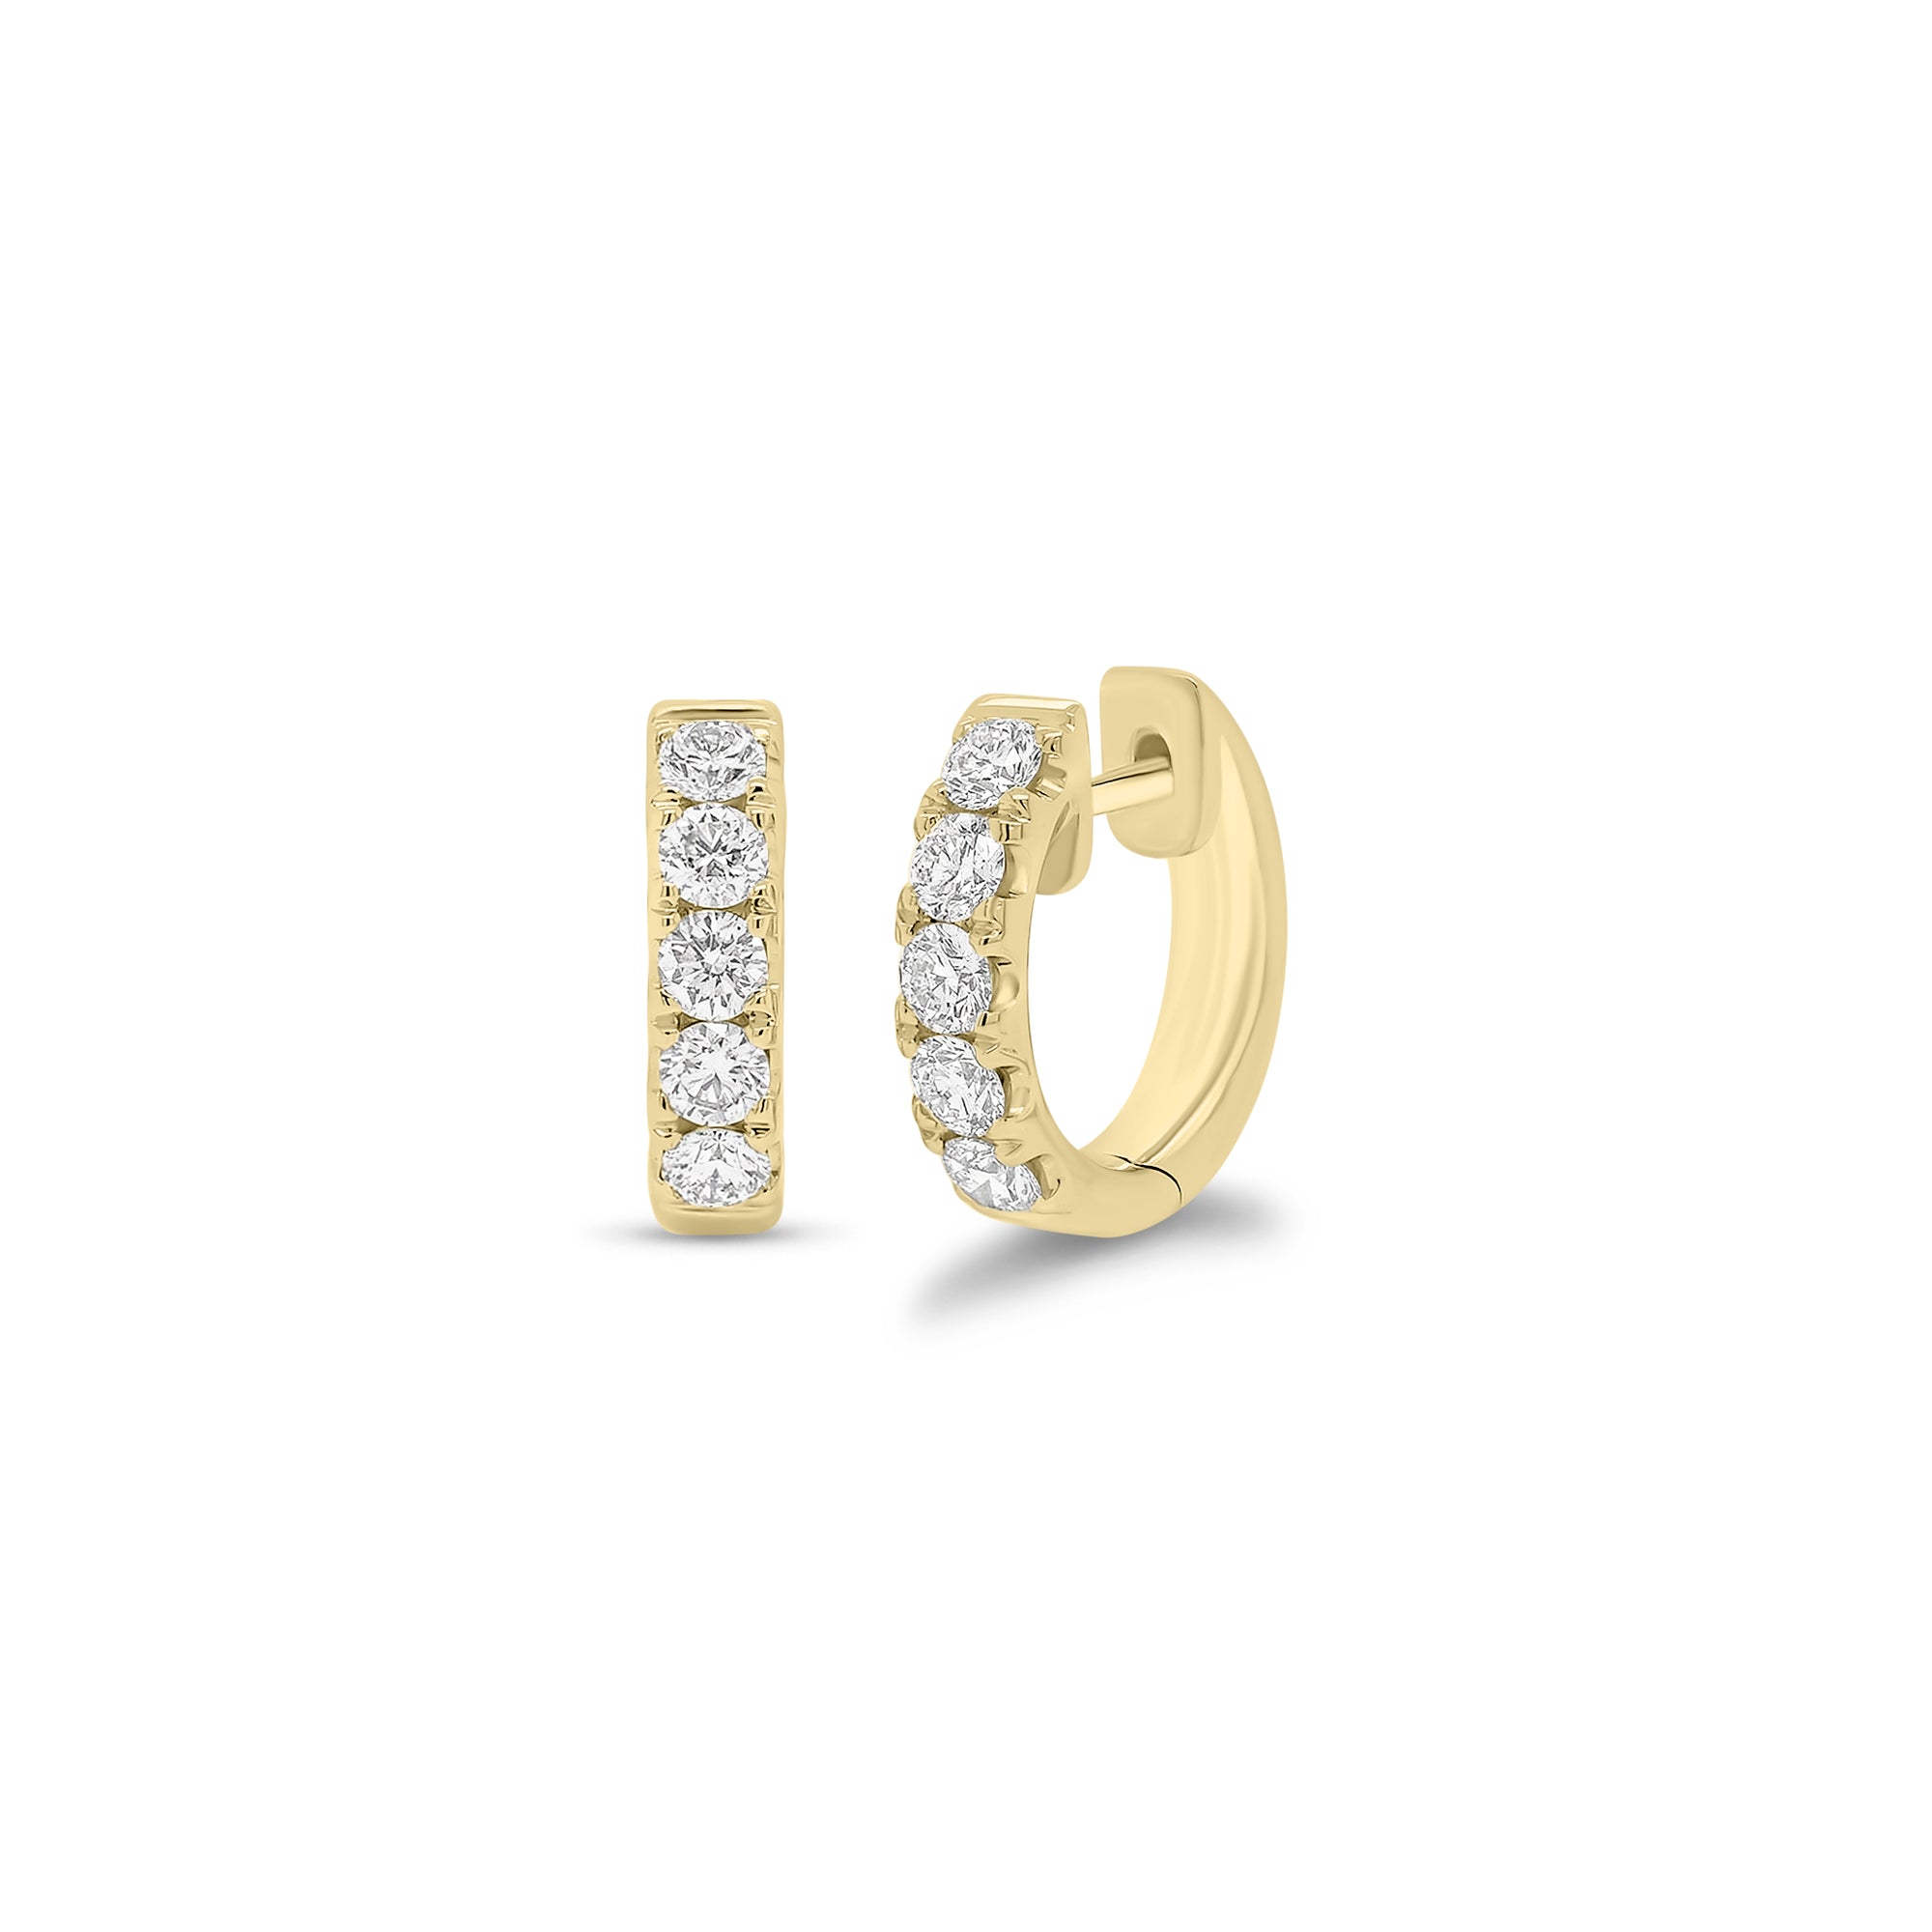 10-Stone Diamond Huggie Earrings - 18K gold weighing 5.52 grams  - 10 round diamonds weighing 0.84 carats